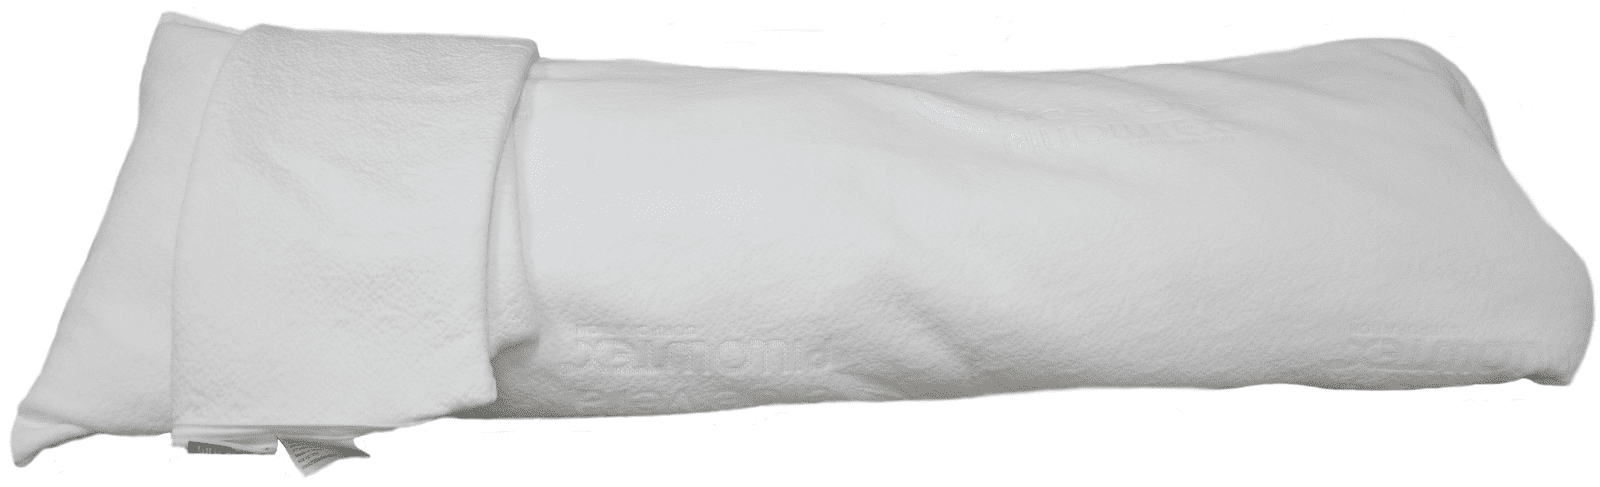 walmart body pillow cover